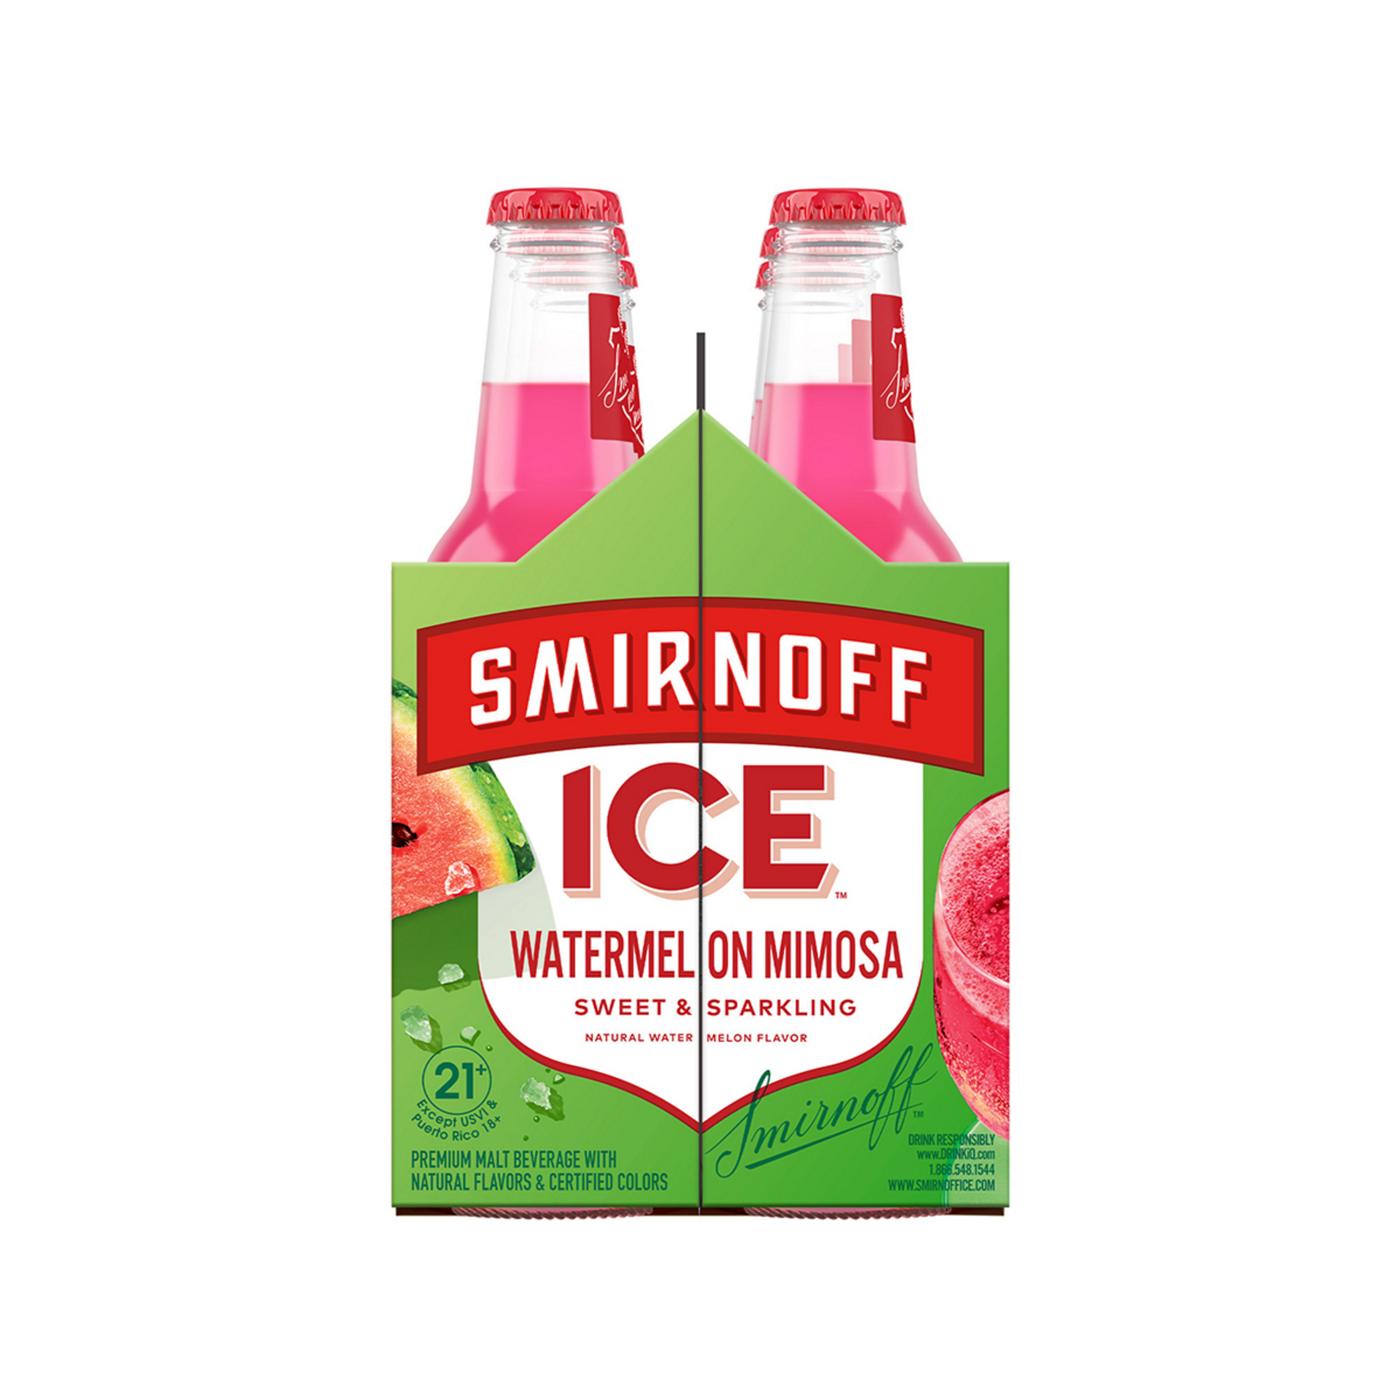 Smirnoff Ice Watermelon Mimosa; image 5 of 5